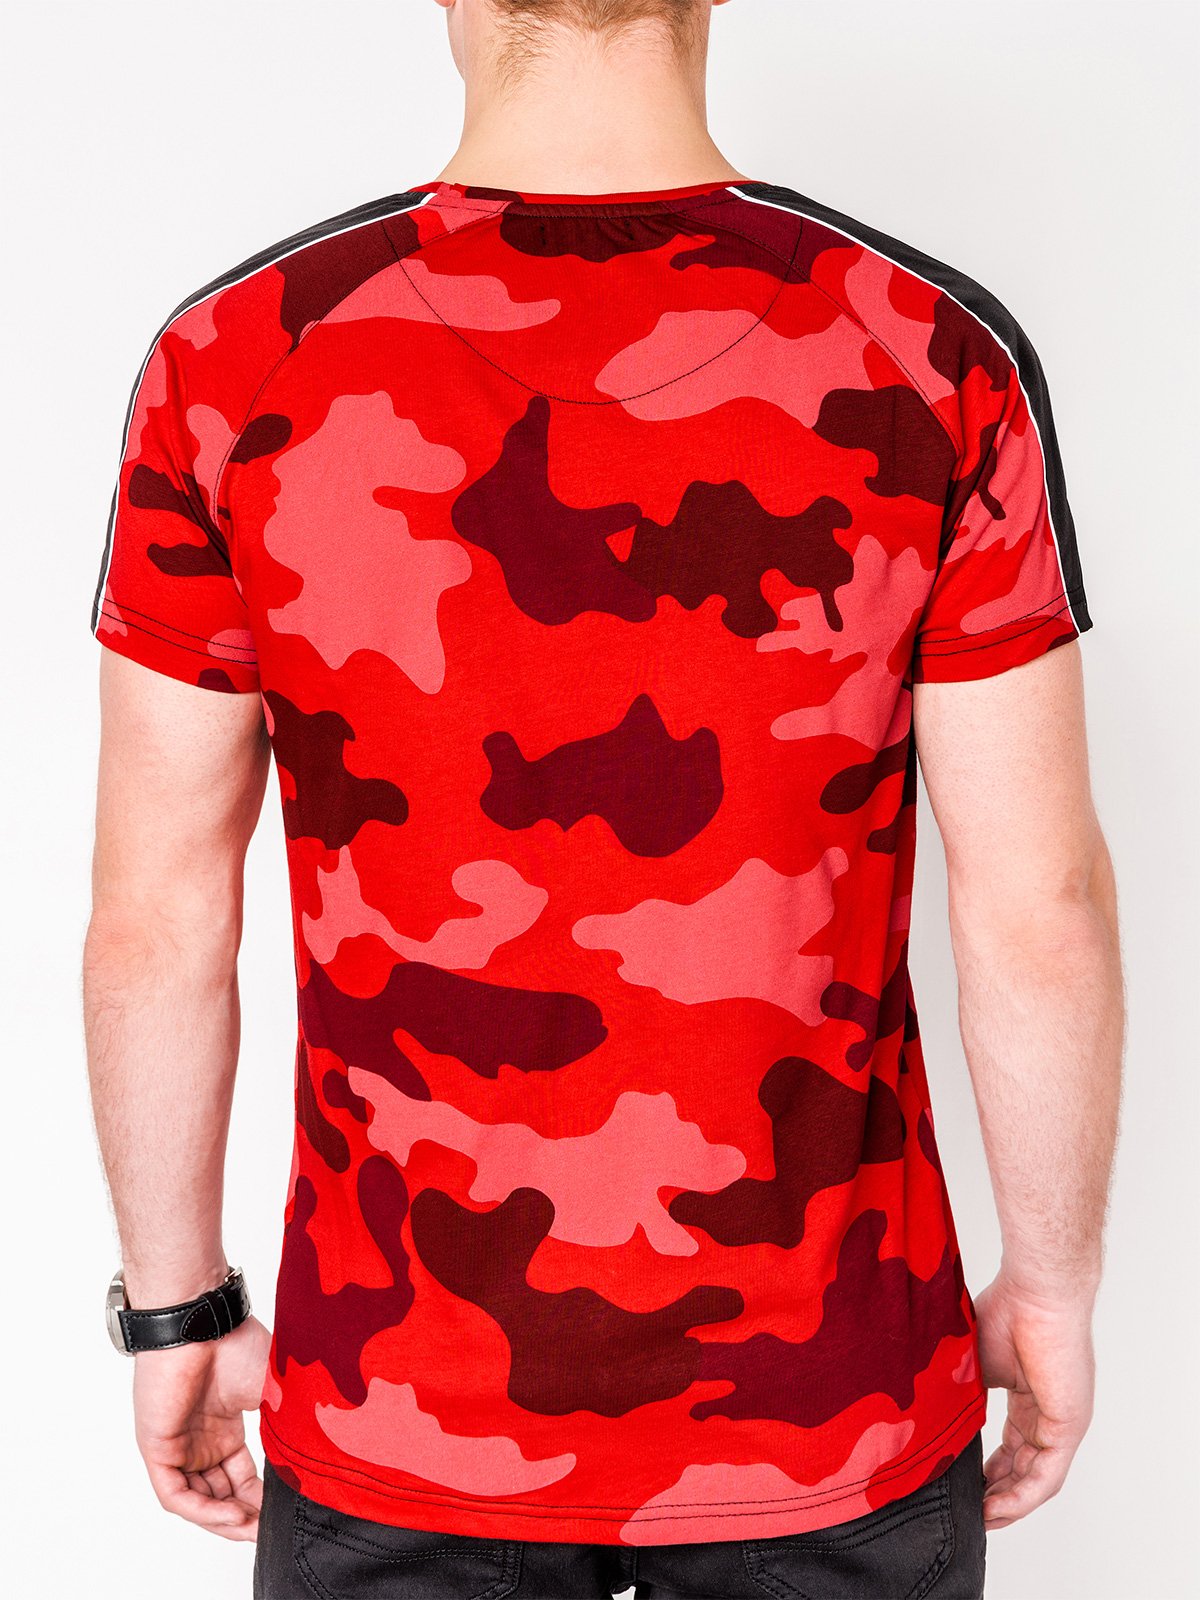 Men's camo printed t-shirt S948 - red/camo | MODONE wholesale ...